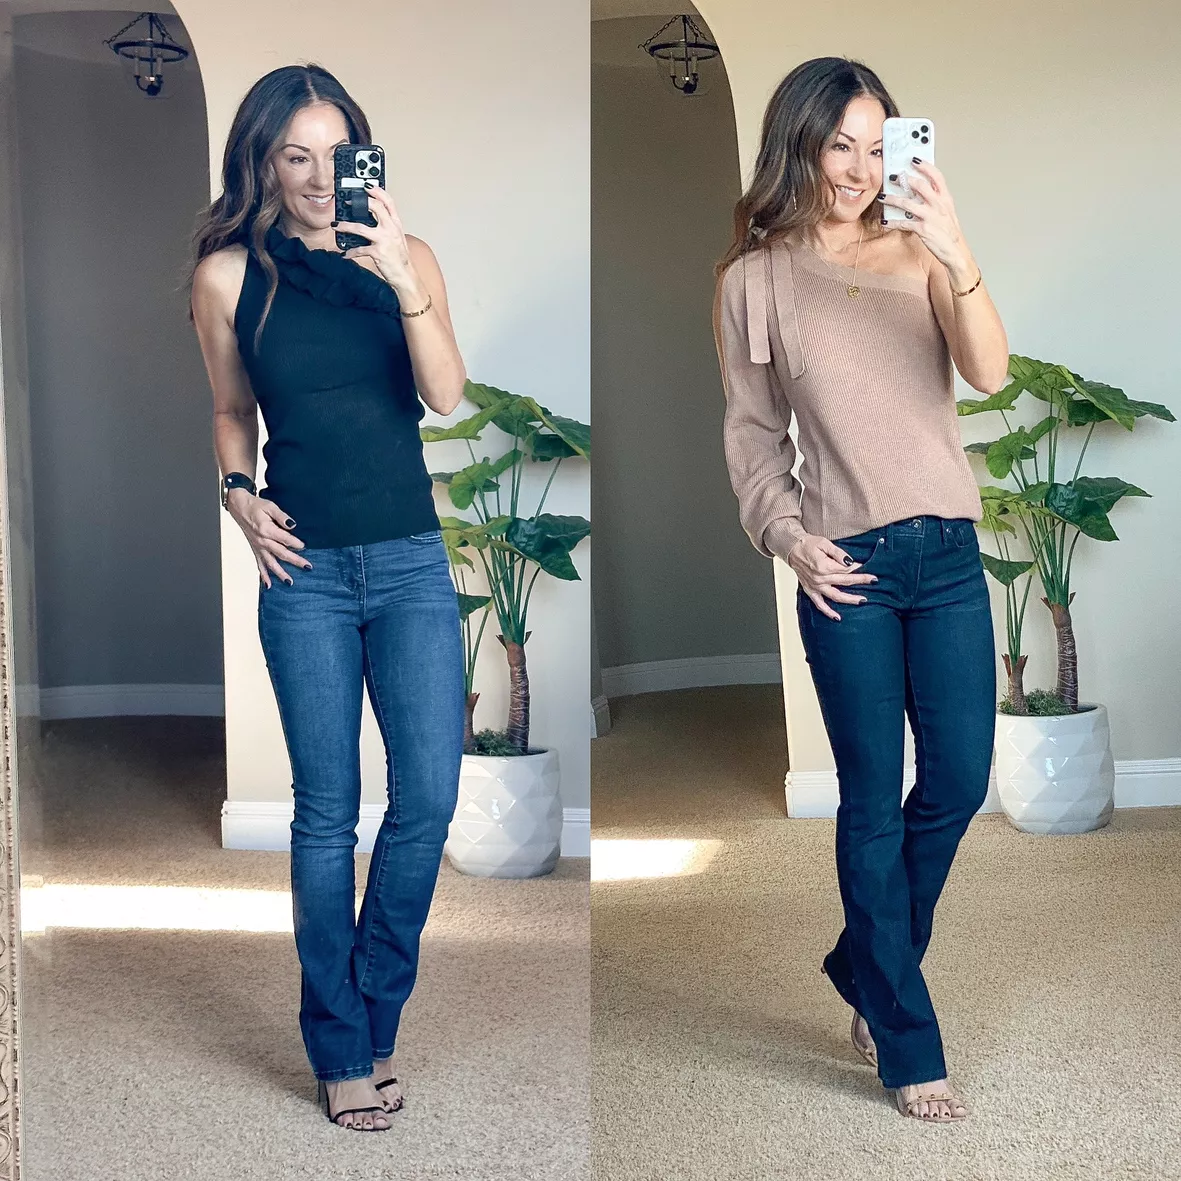 Sofia Jeans by Sofia Vergara Women's Plus Size High Rise Skinny